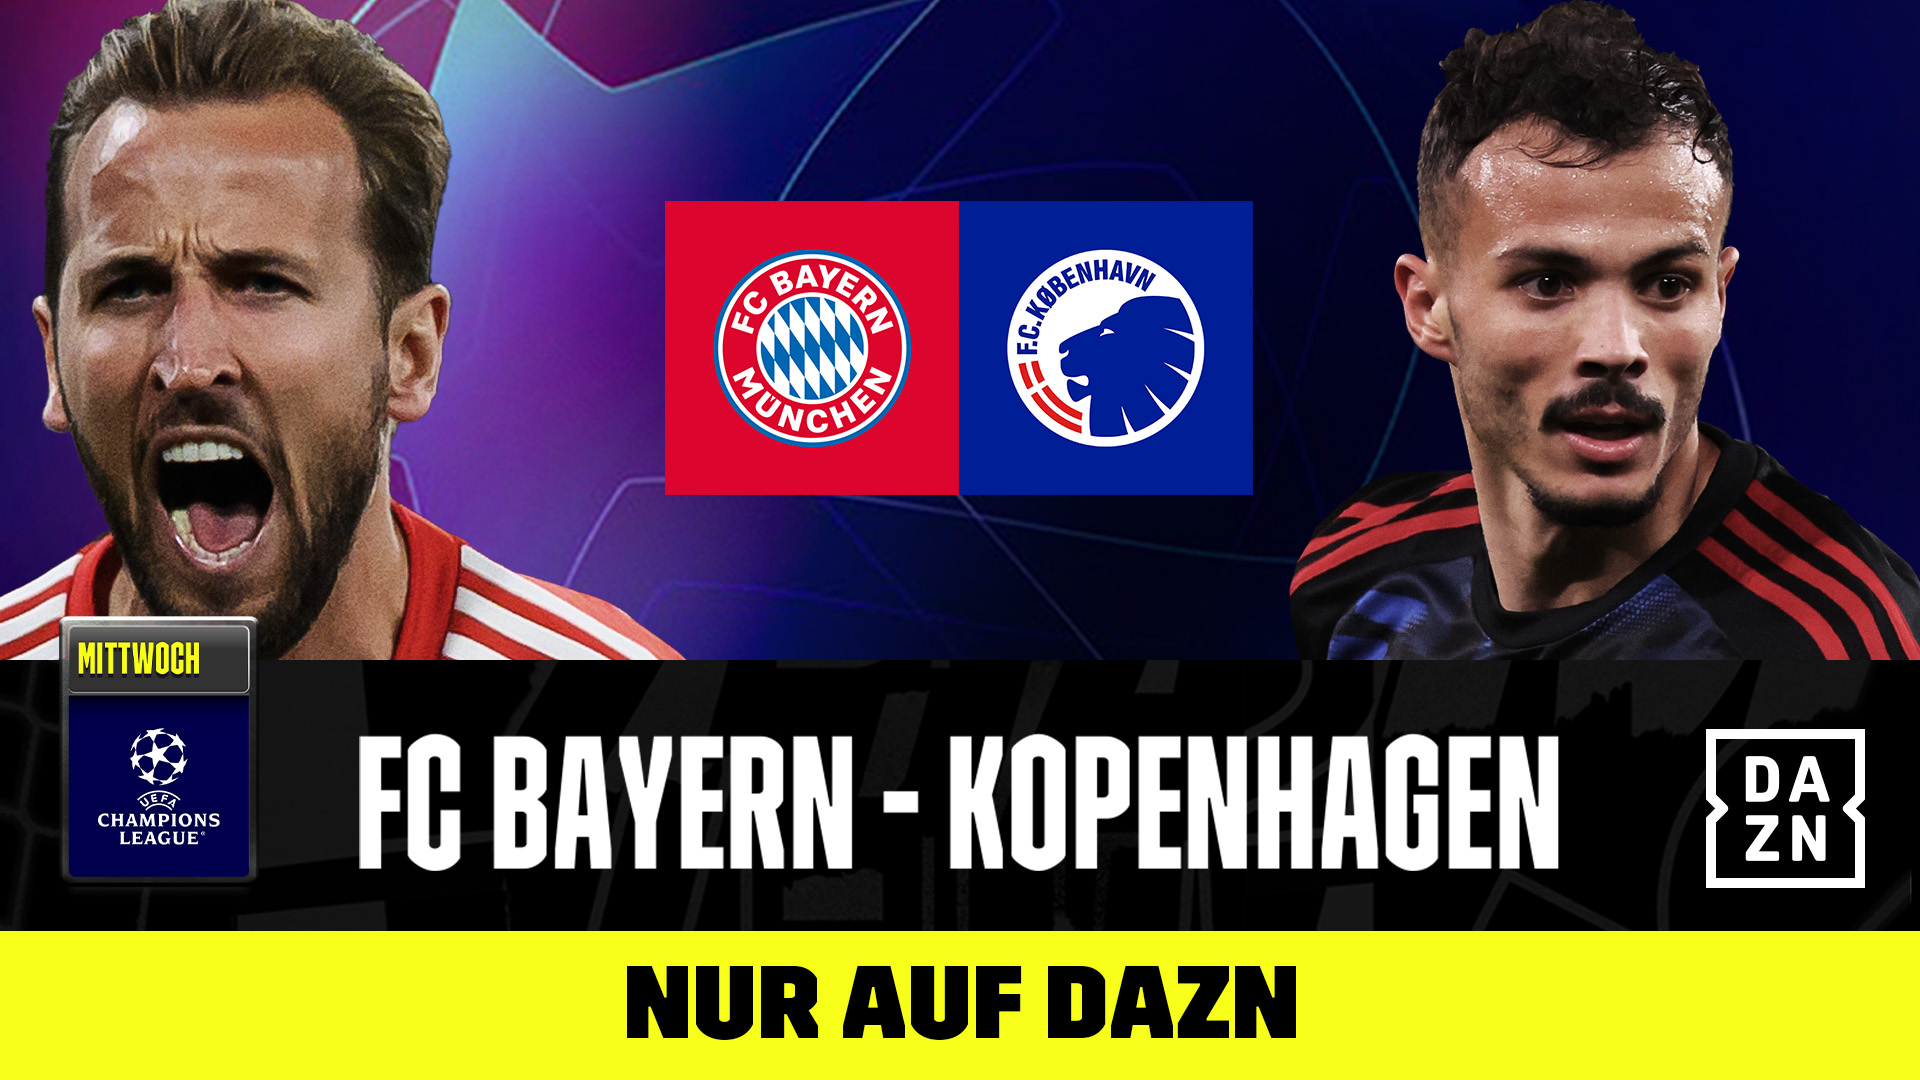 FC Bayern München Kopenhagen Champions League Header MD5 2023